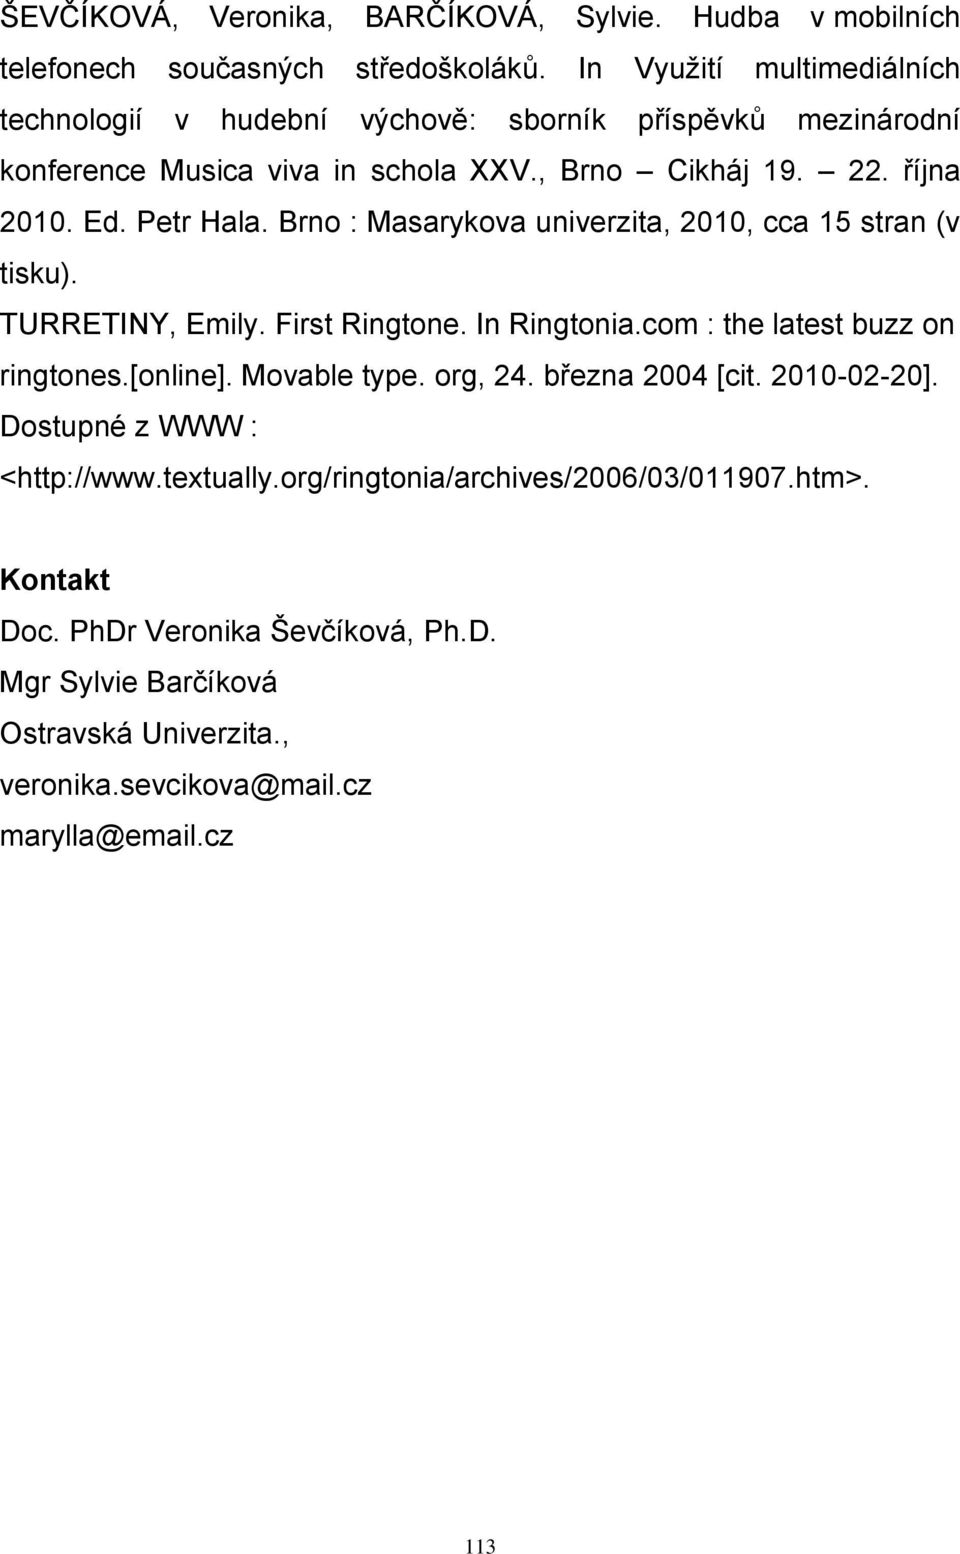 Brno : Masarykova univerzita, 2010, cca 15 stran (v tisku). TURRETINY, Emily. First Ringtone. In Ringtonia.com : the latest buzz on ringtones.[online]. Movable type. org, 24.